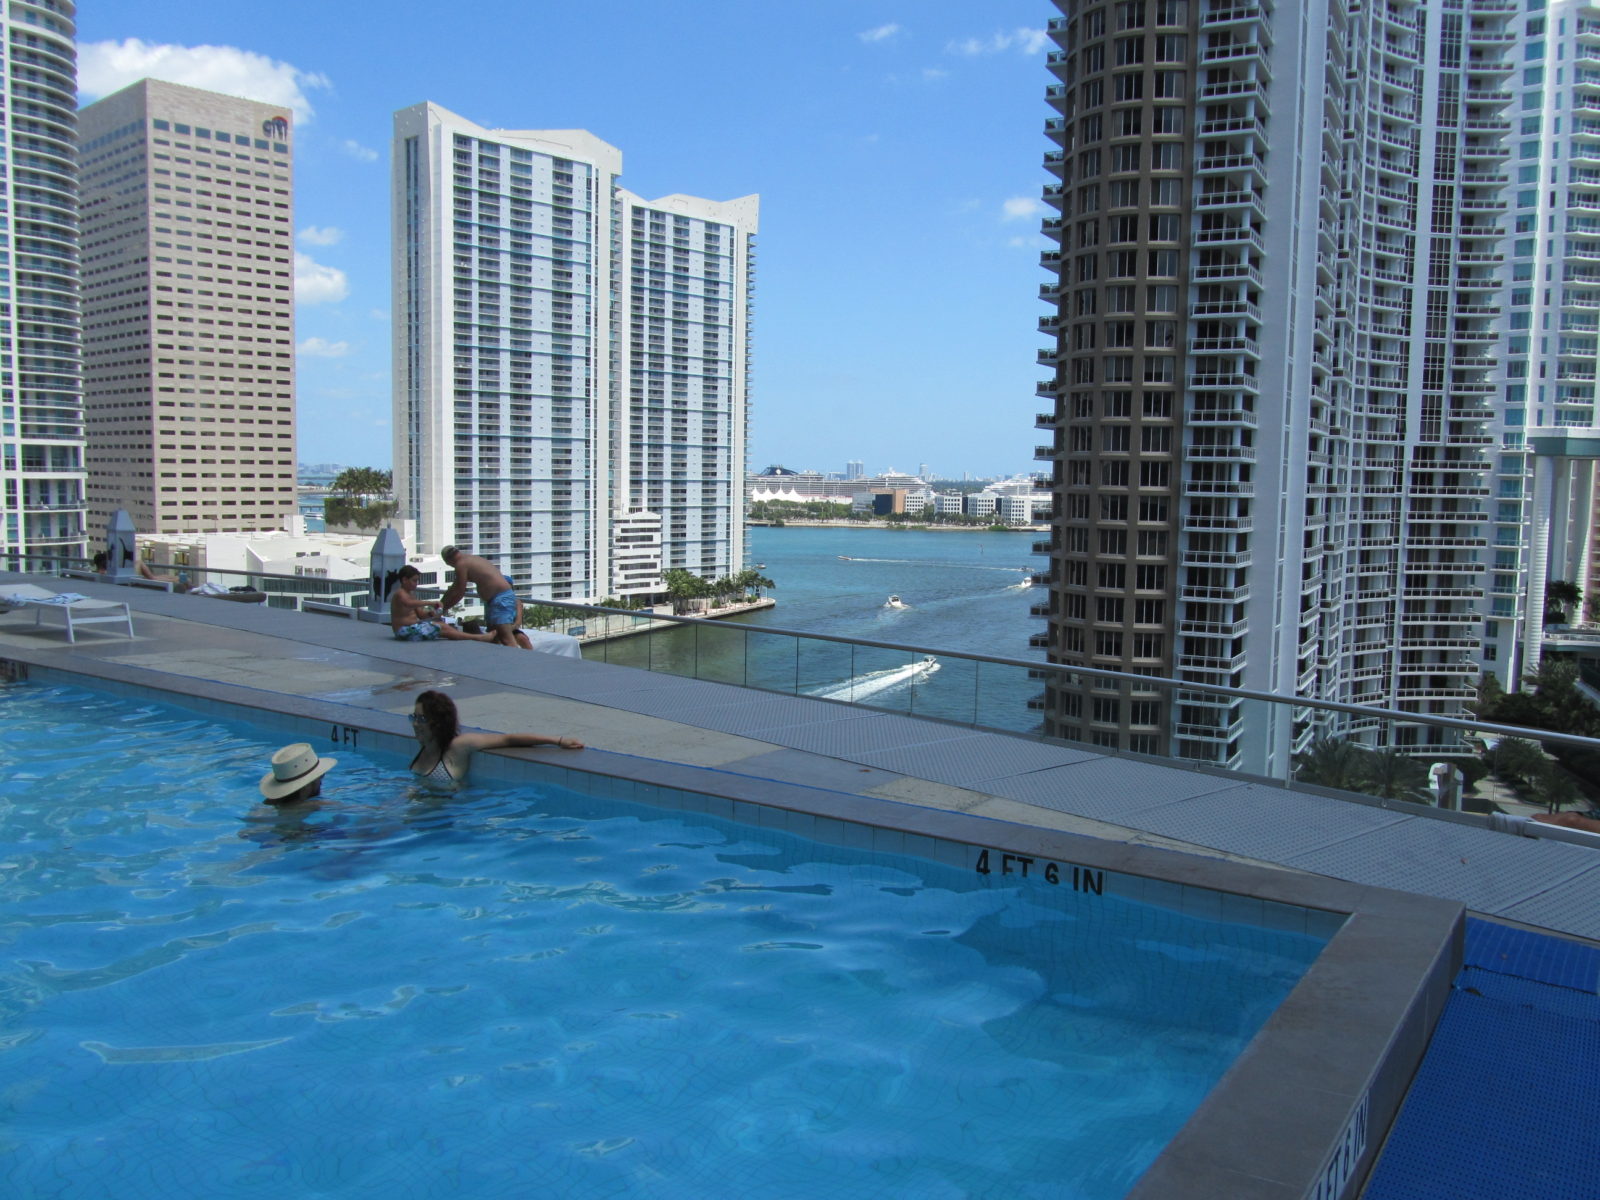 Viceroy Hotel Miami 1600x1200 